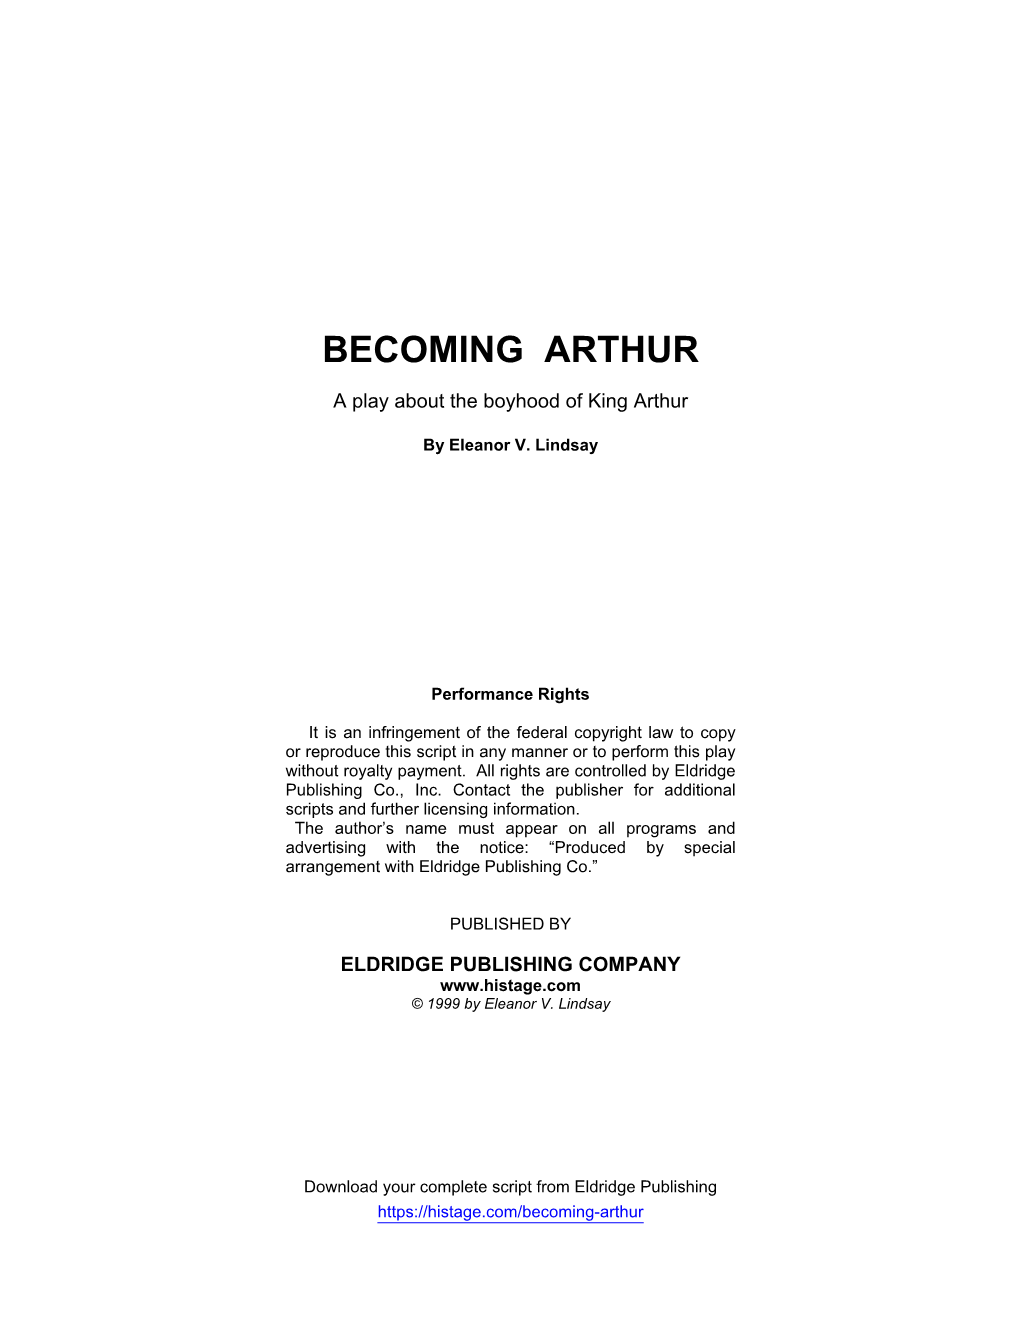 Becoming Arthur